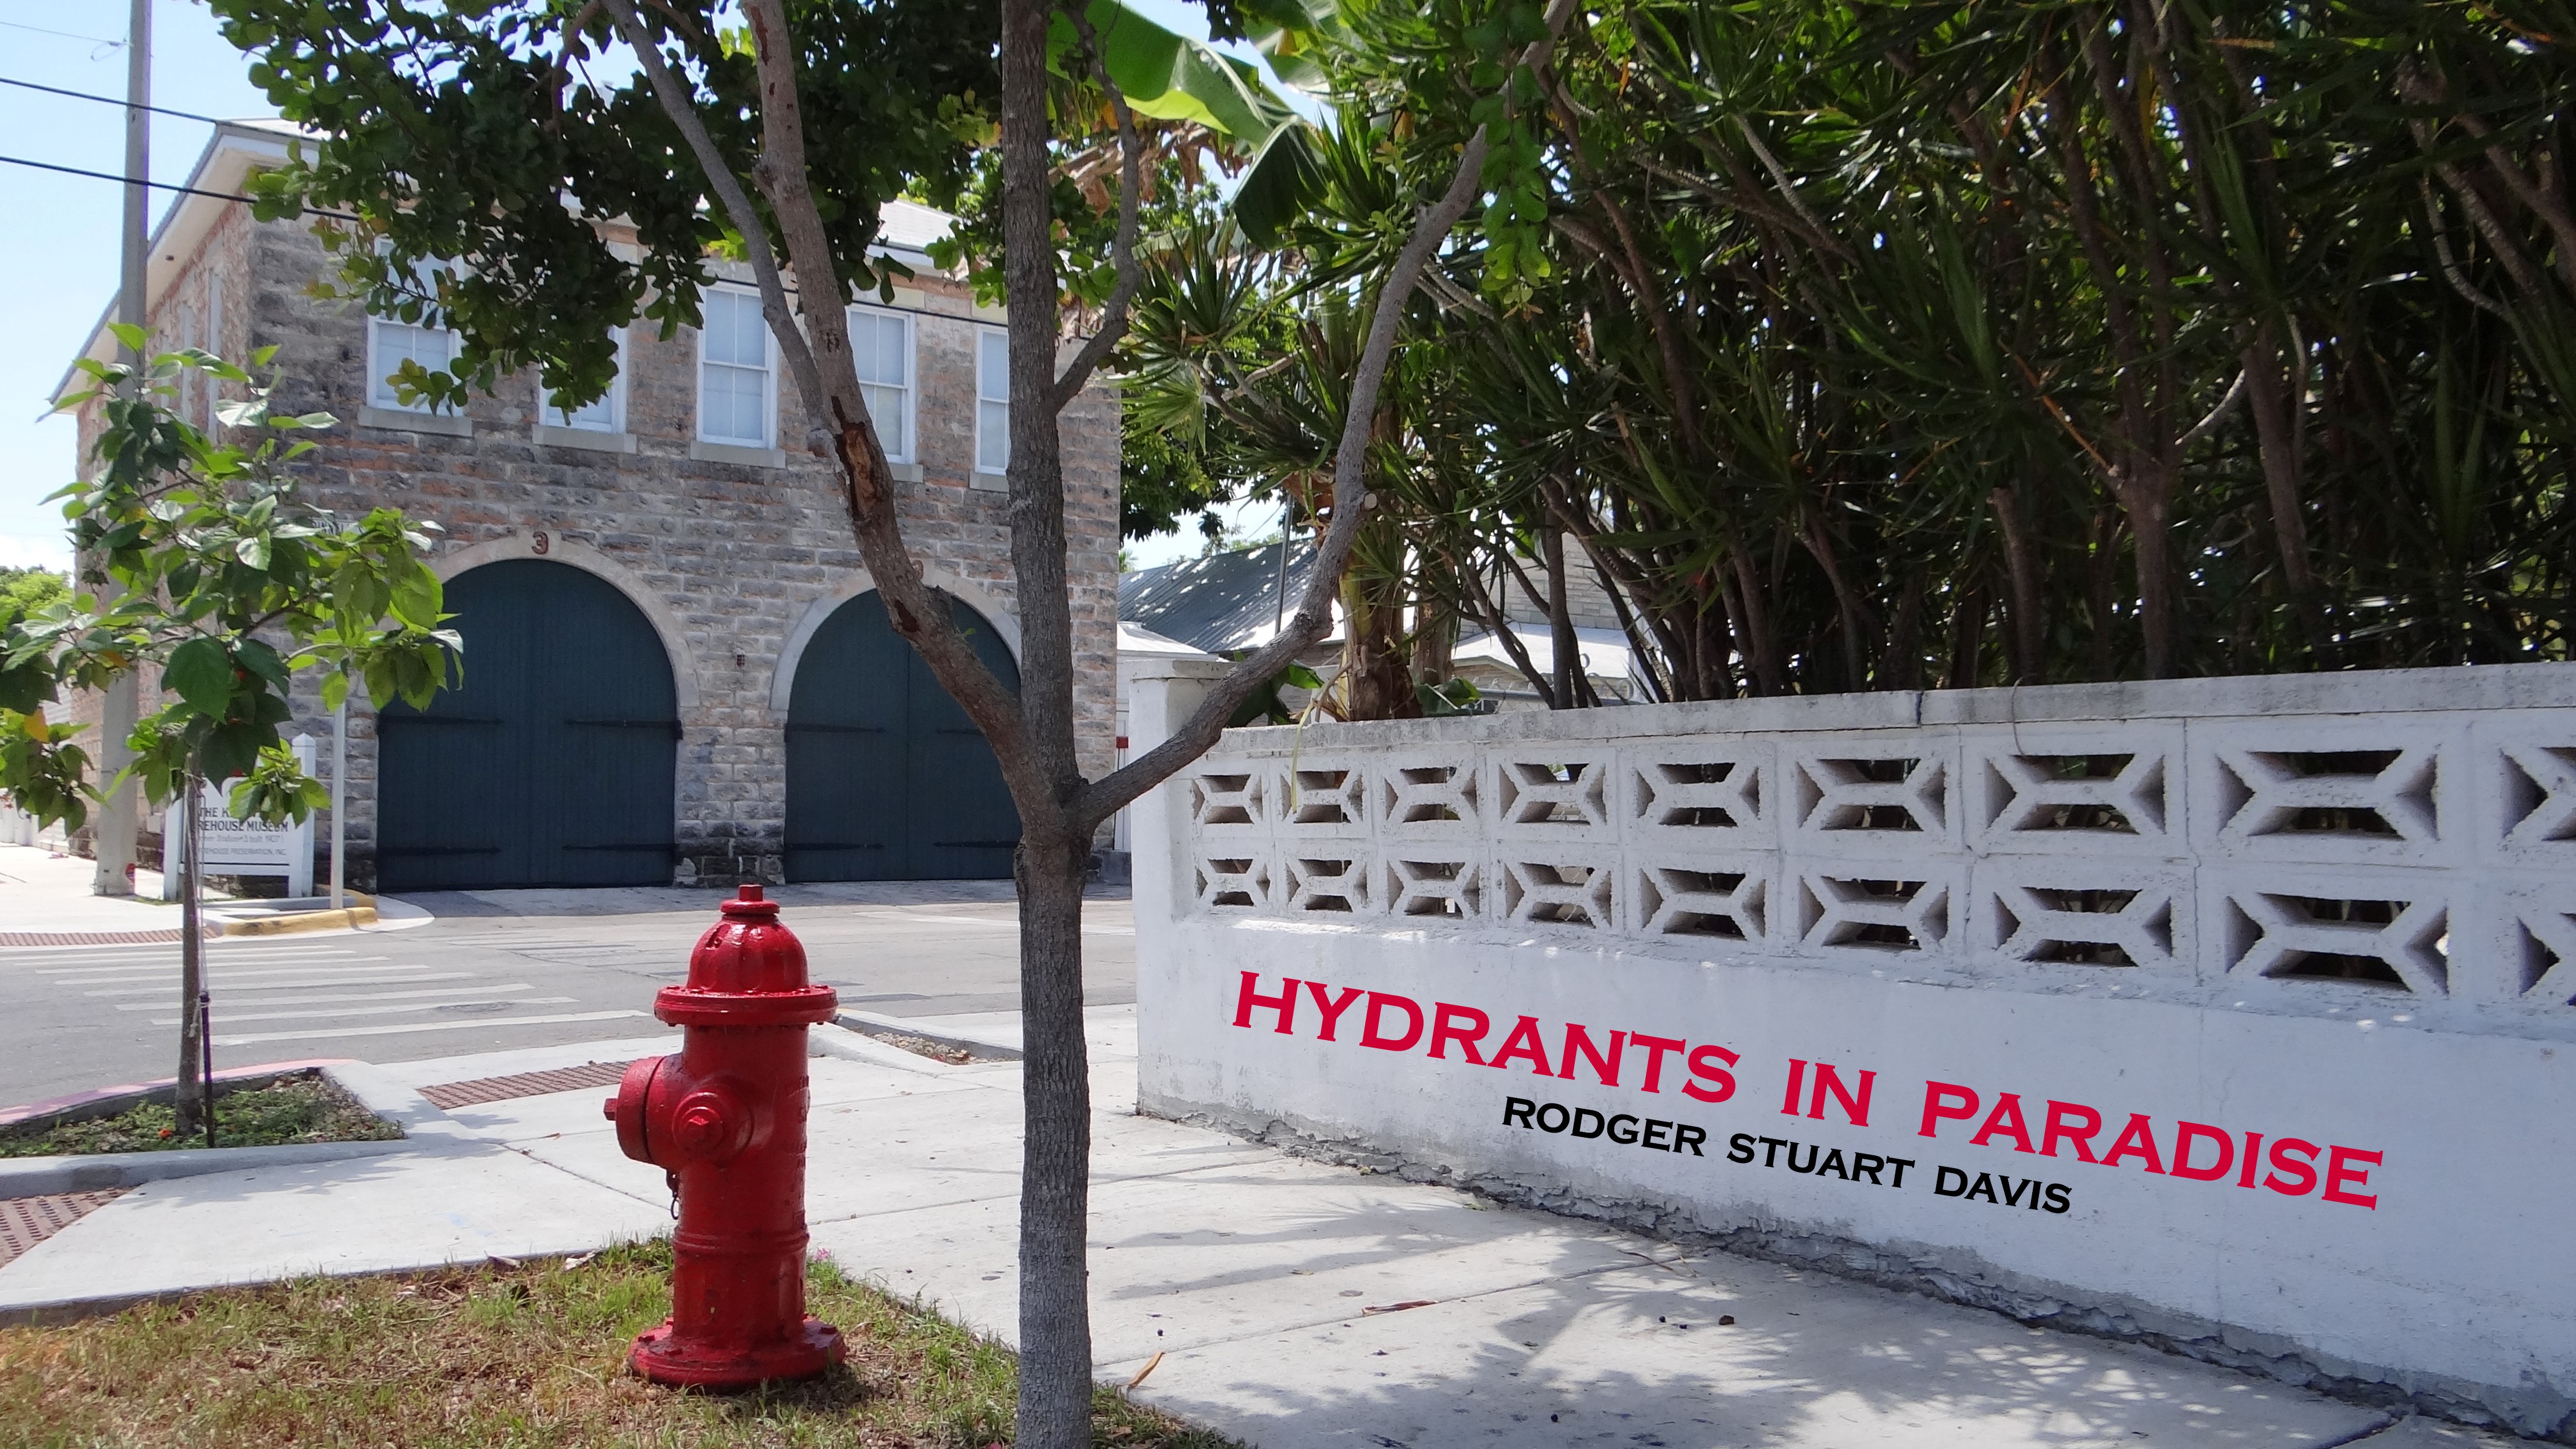 Rod-Stu-Da’s Hydrants in Paradise Photo Exhibit Feb 17-Mar 17!